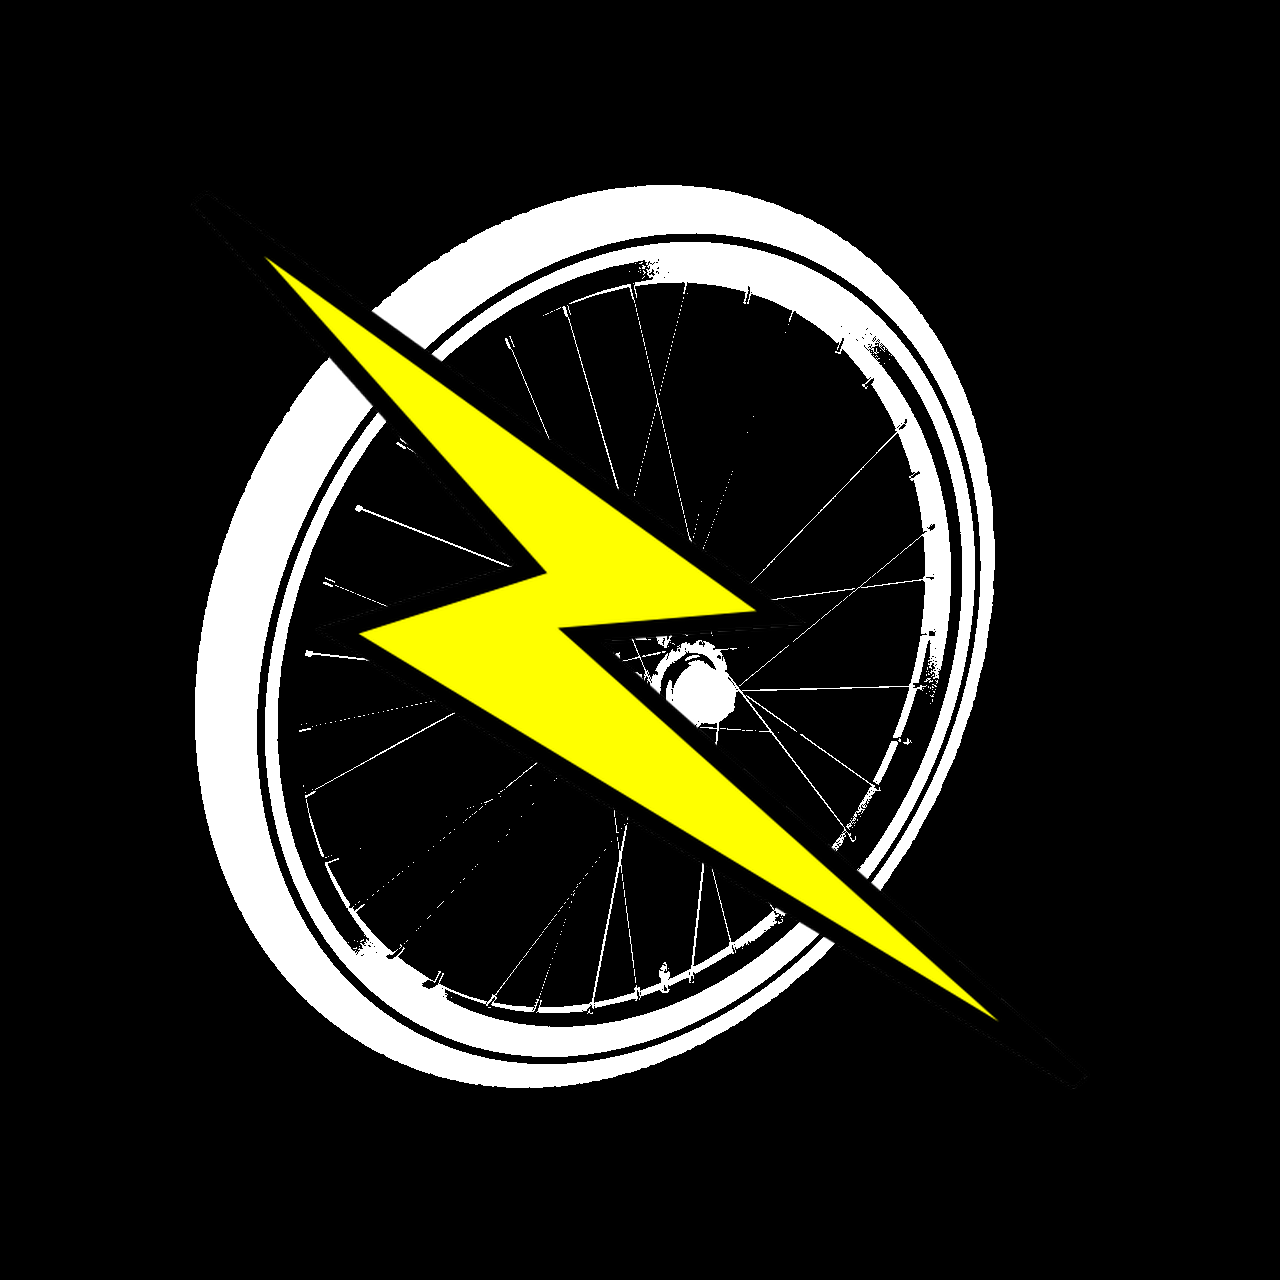 Lightning Bolt Band Logo - Critique: Improving logo so that it is more conservative ...